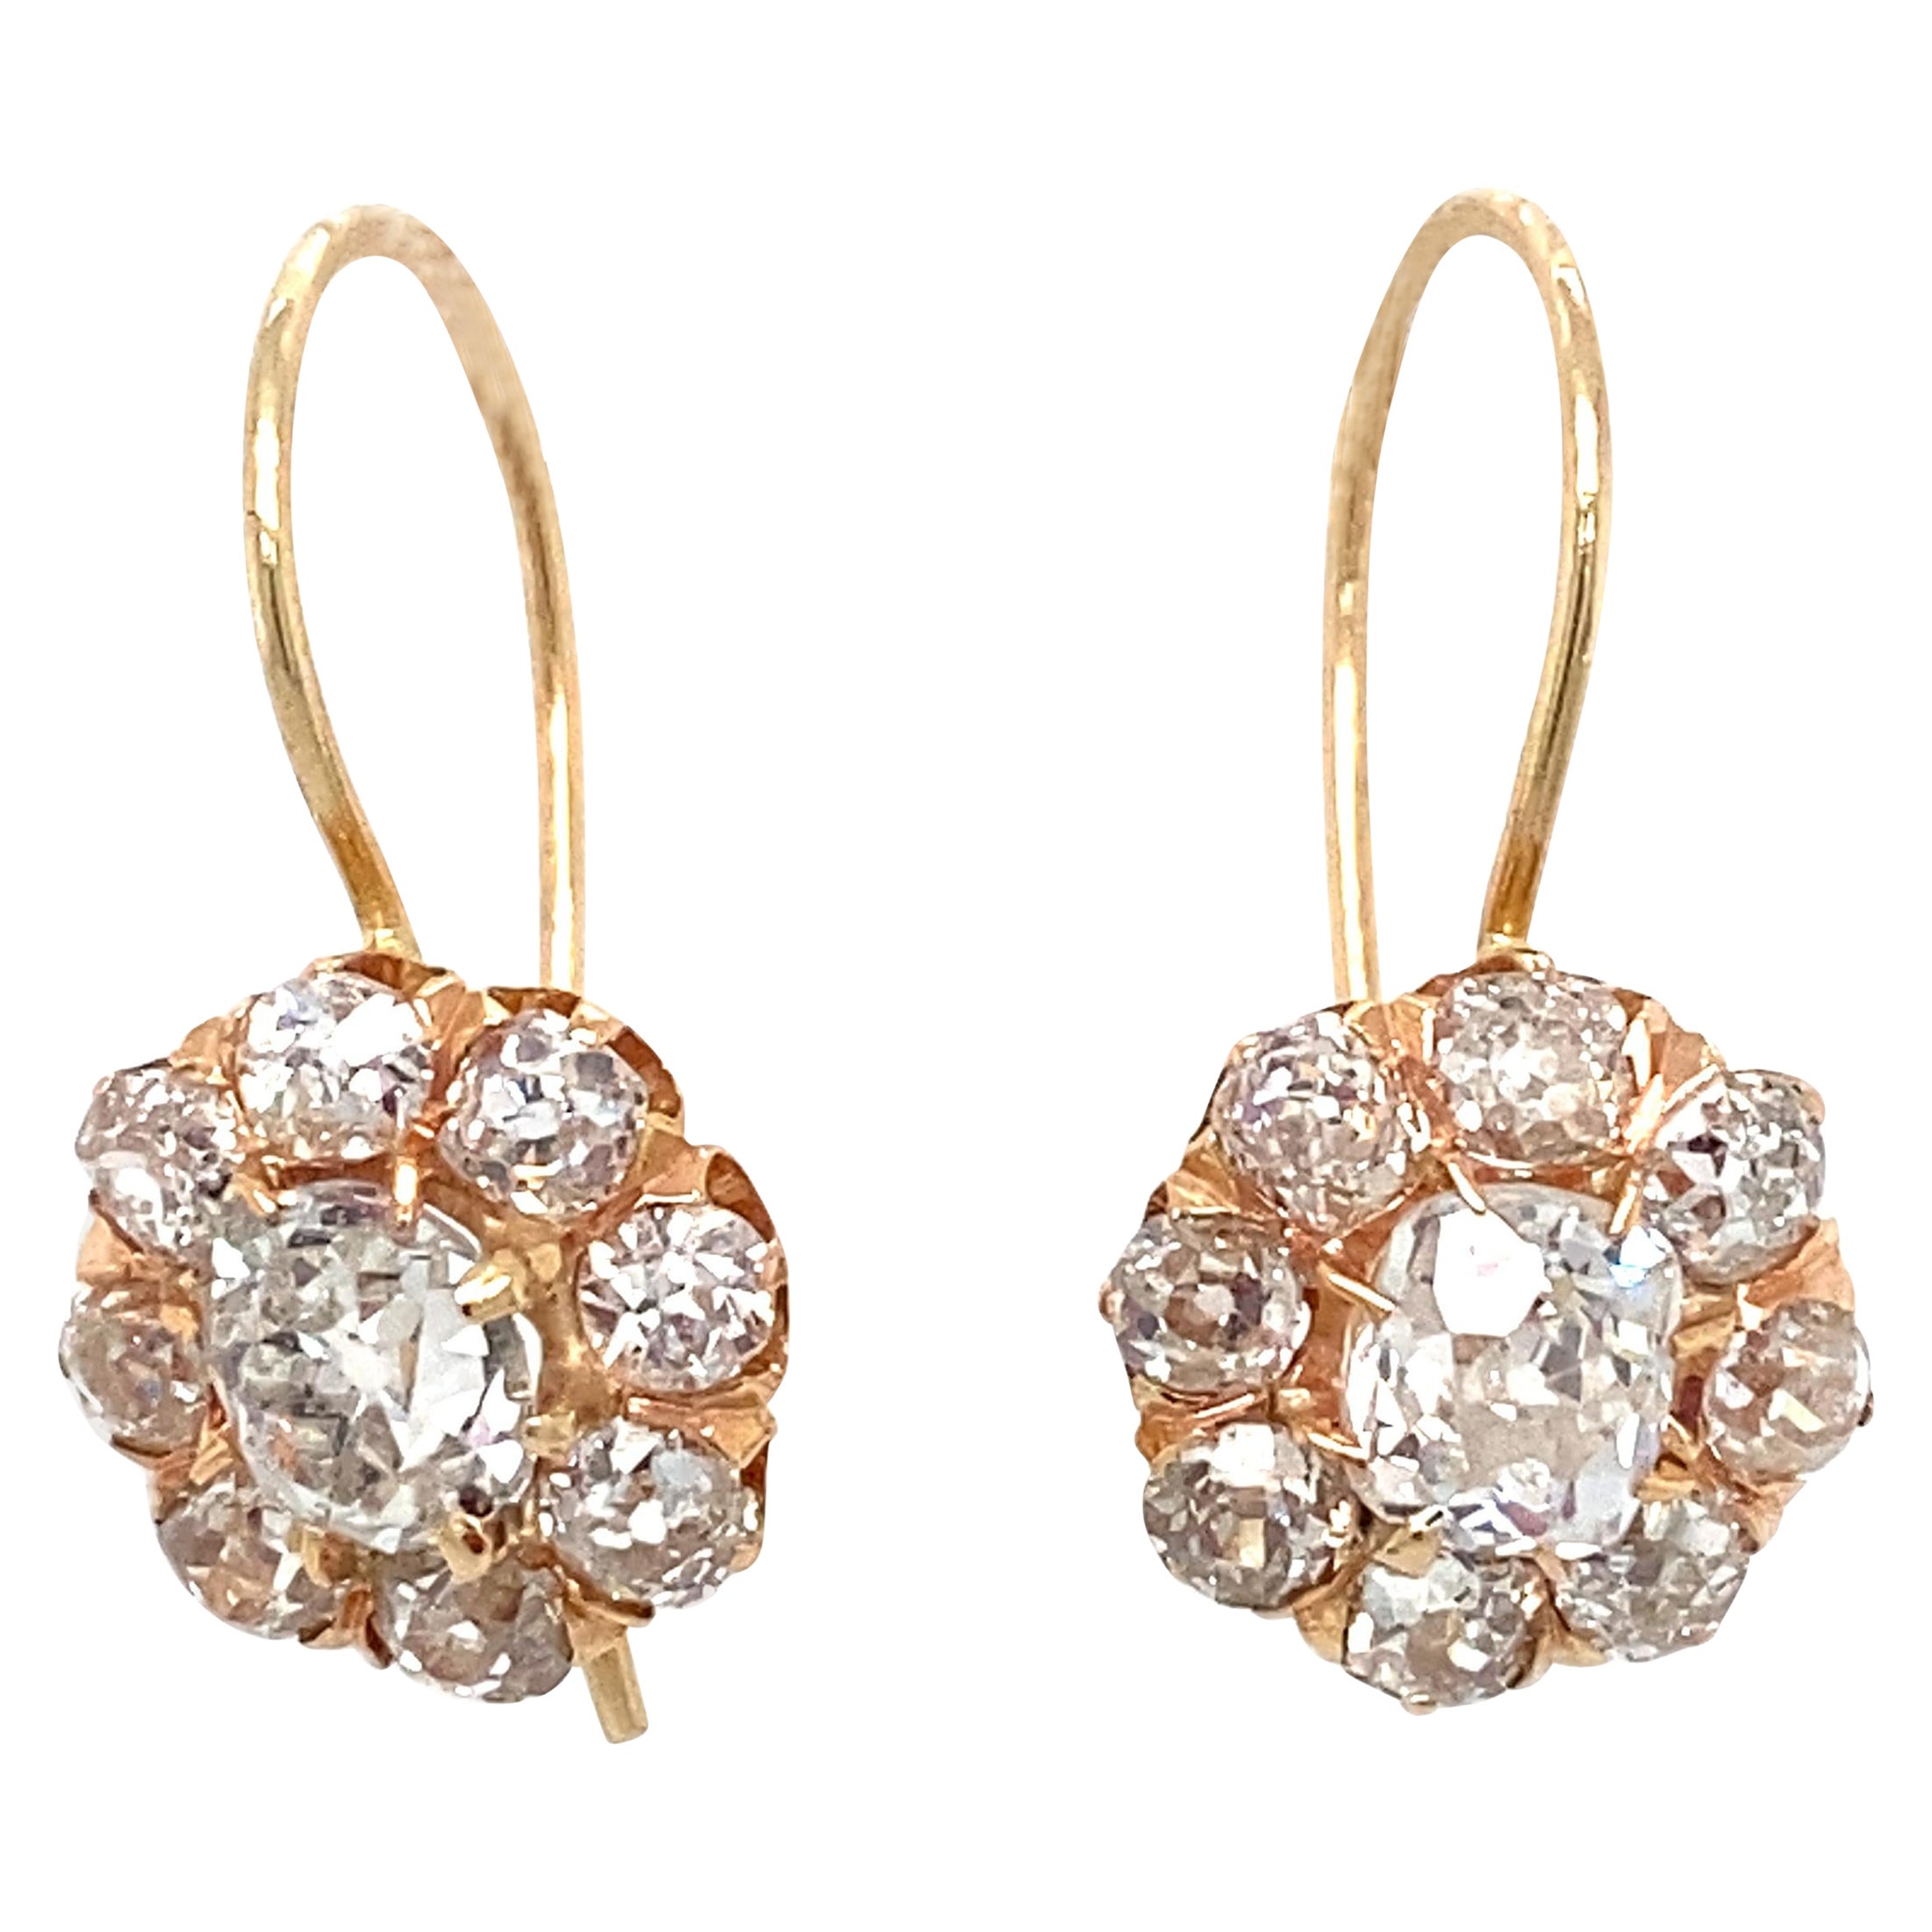 1920s Art Deco 3.50 Carat Diamond Drop Earrings in 18 Karat Yellow Gold 